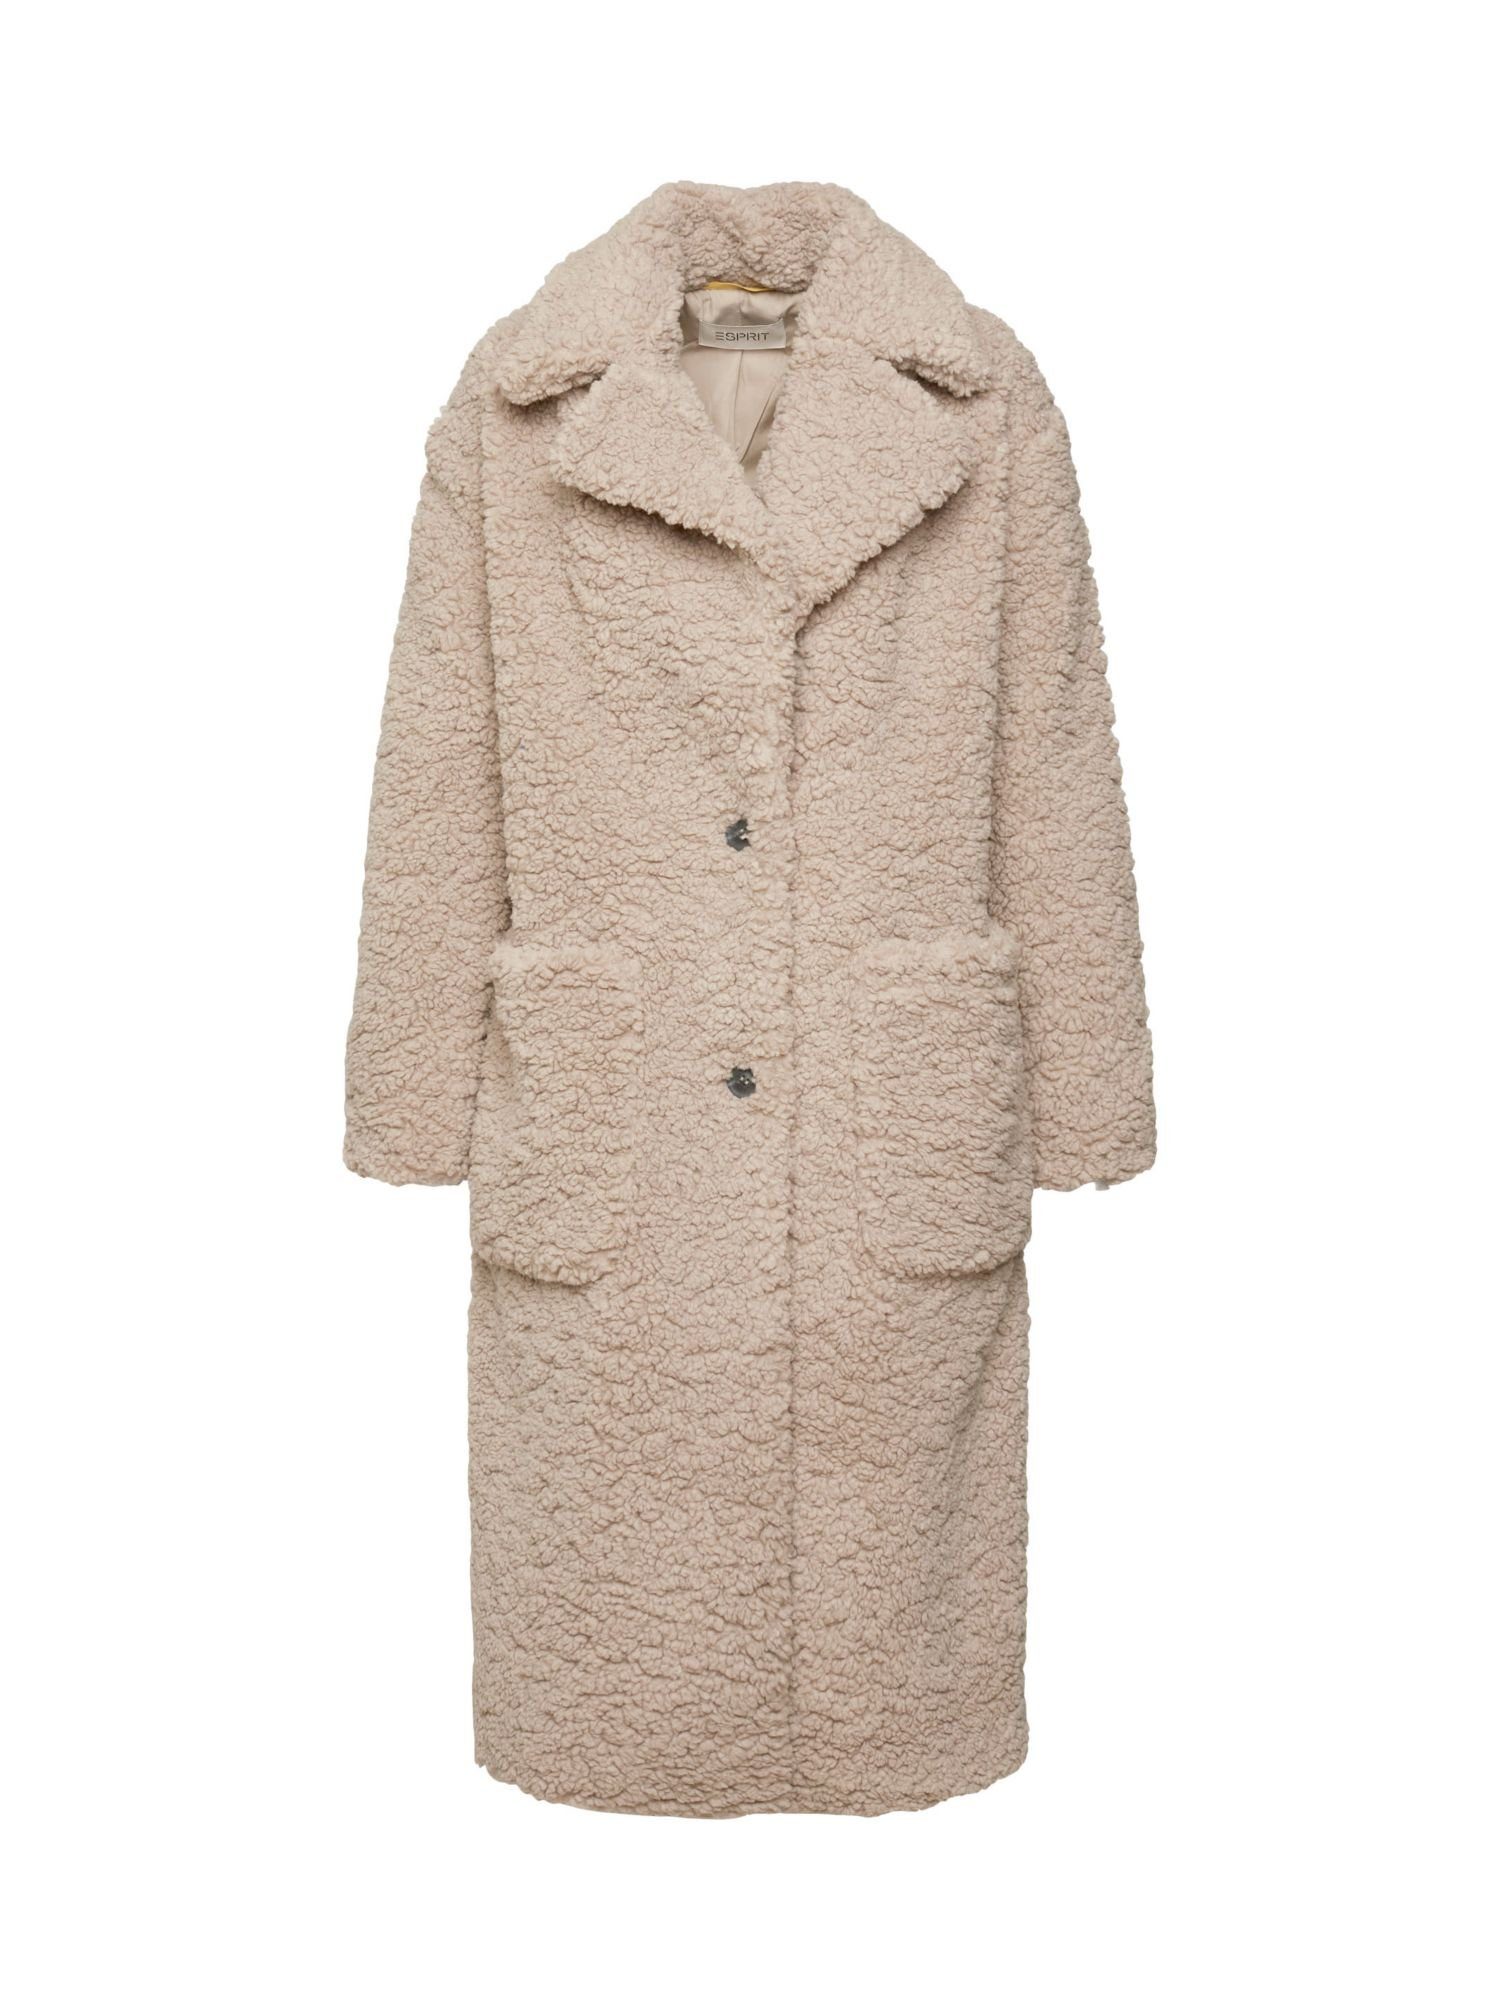 Esprit Wintermantel »Mantel aus Teddyfell« kaufen | OTTO